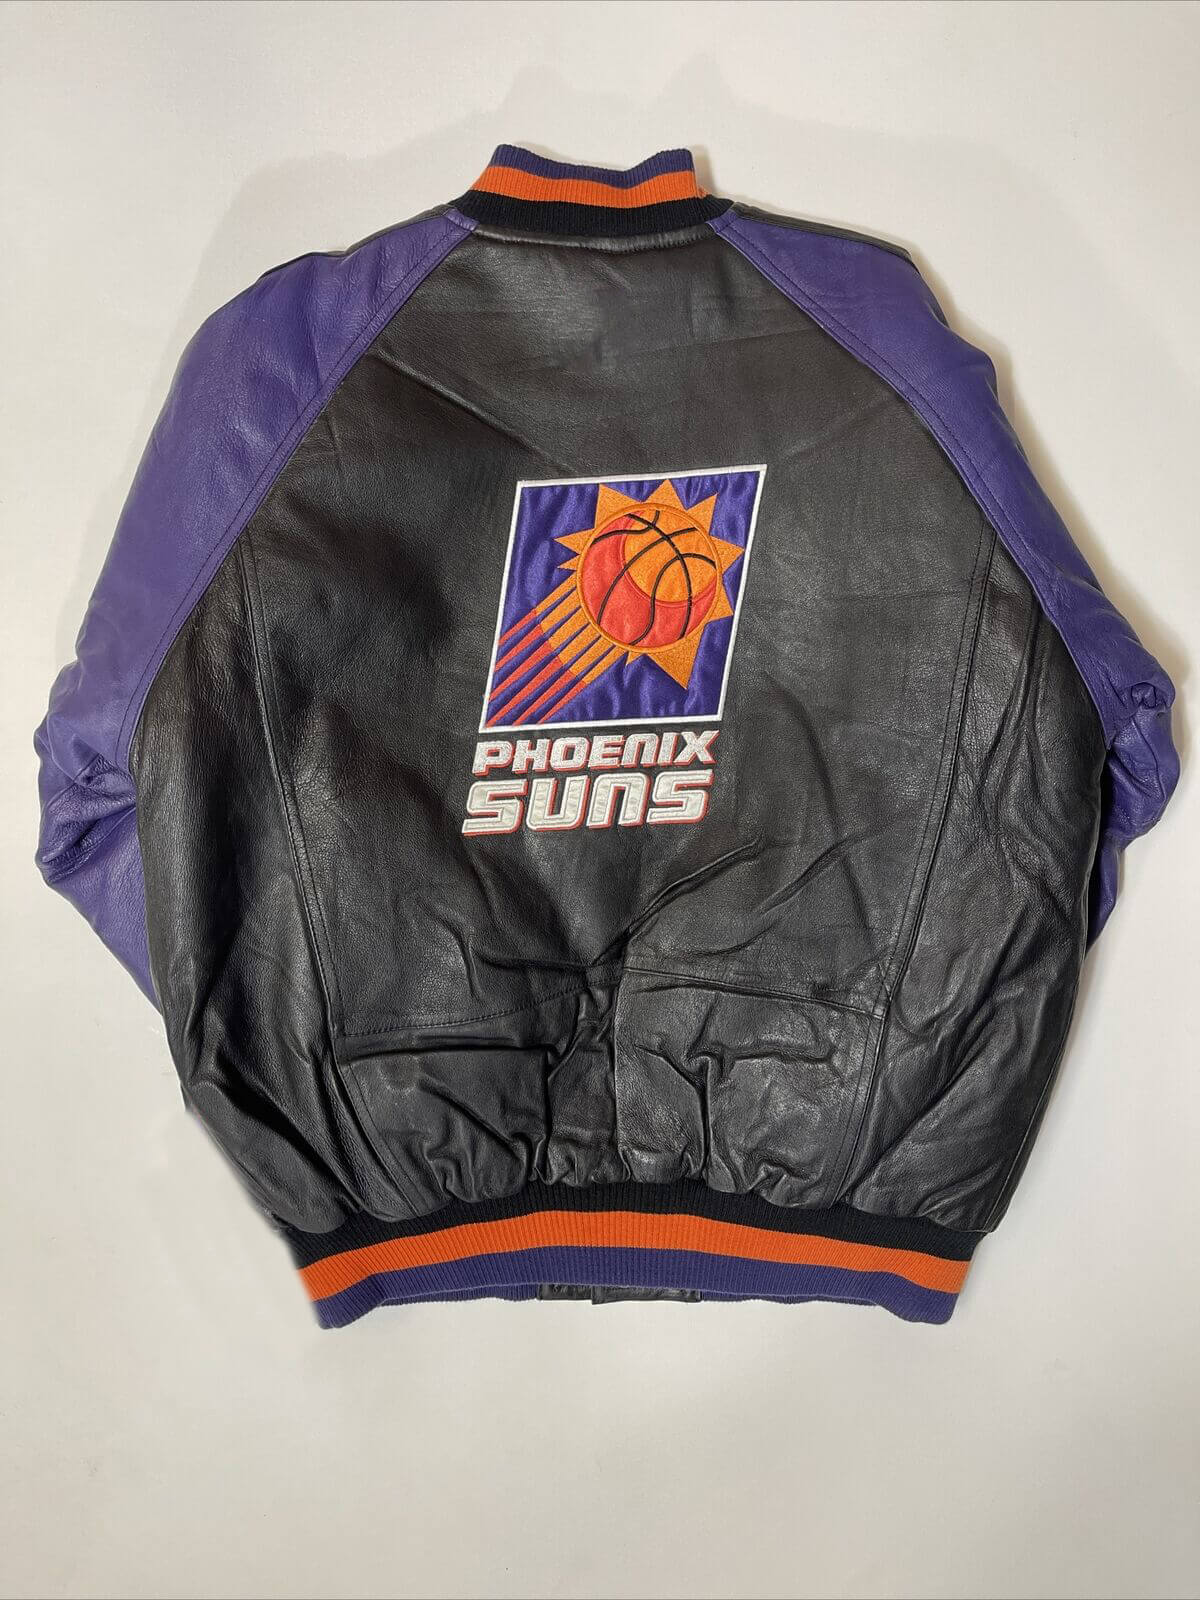 Maker of Jacket Phoenix Suns Pro Player NBA Basketball Leather Jacket